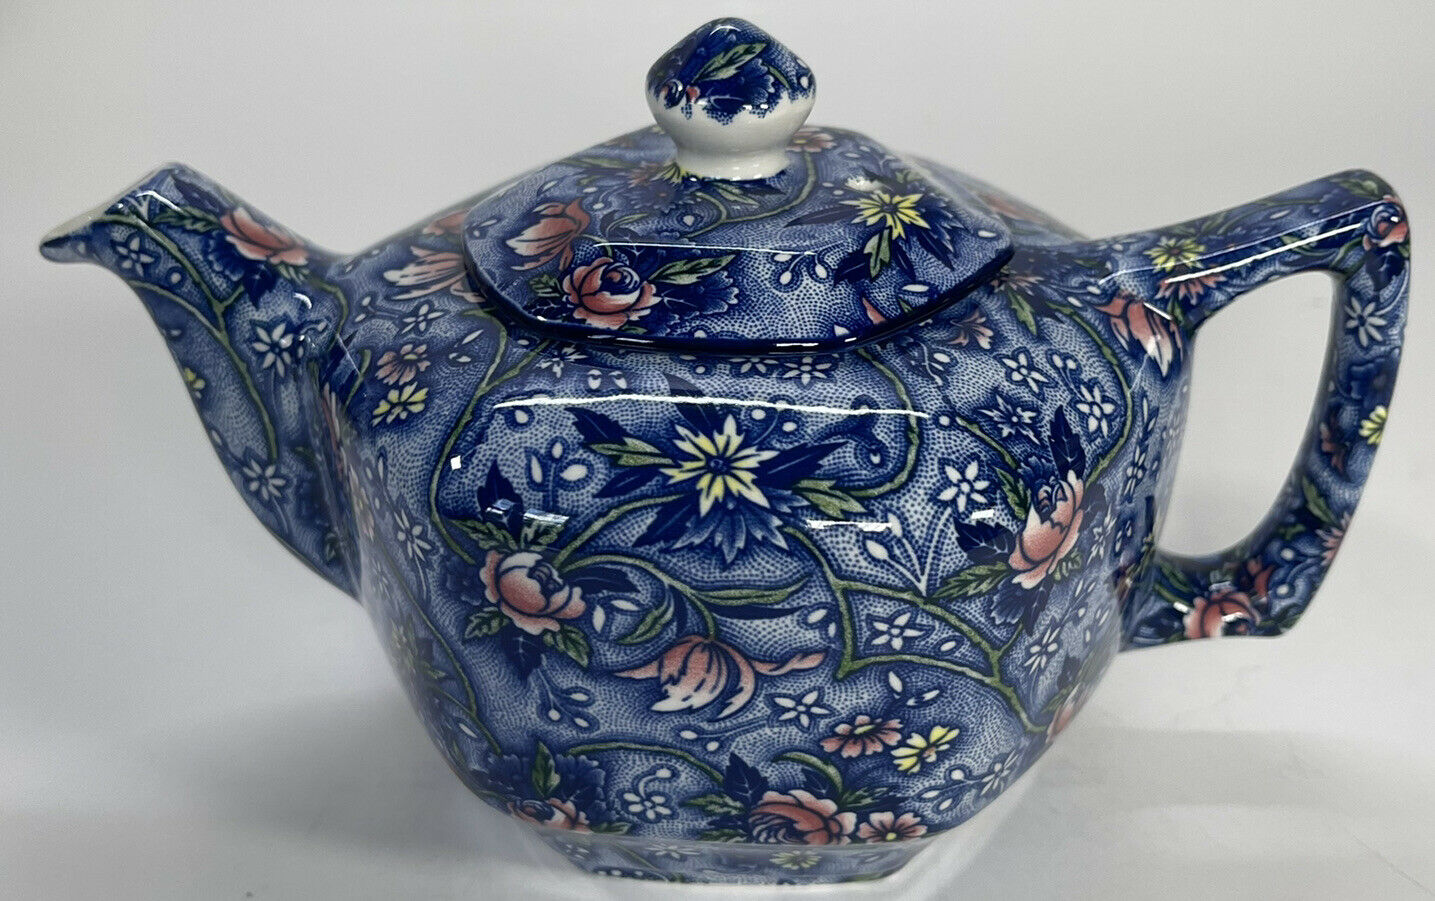 James Sadler & Sons Stokes-on-trent Teapot Blue Chintz Floral Small 20 Oz 4.5"